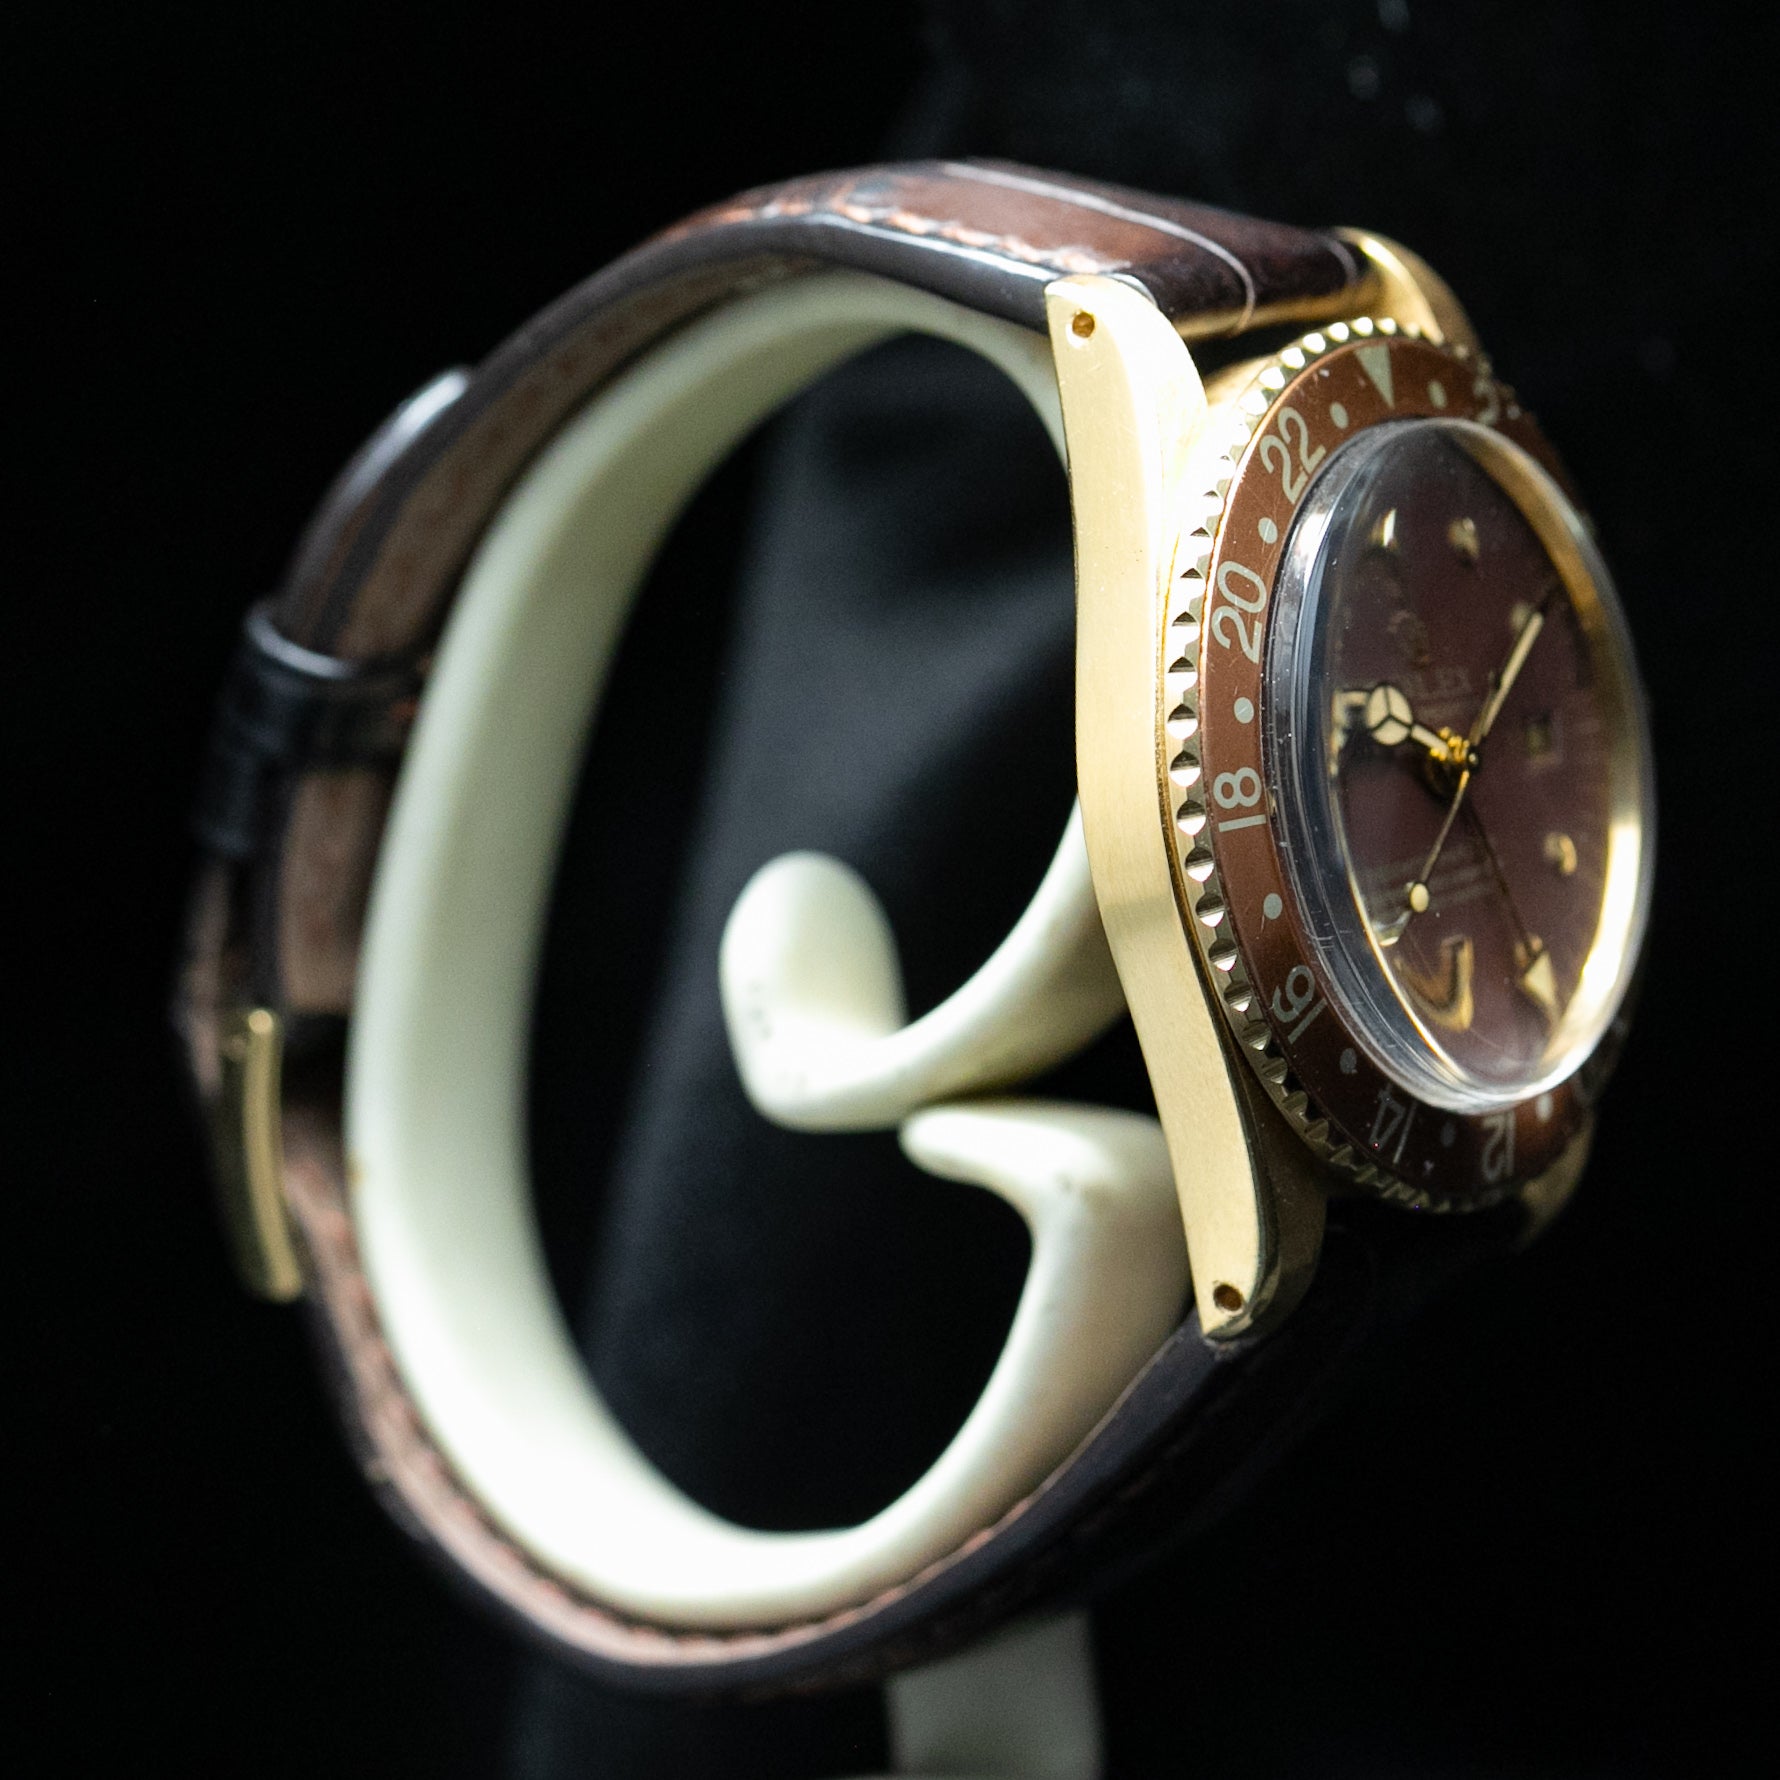 Rolex Gmt master nipple dial or 1675-8 full set - L'Atelier du Temps